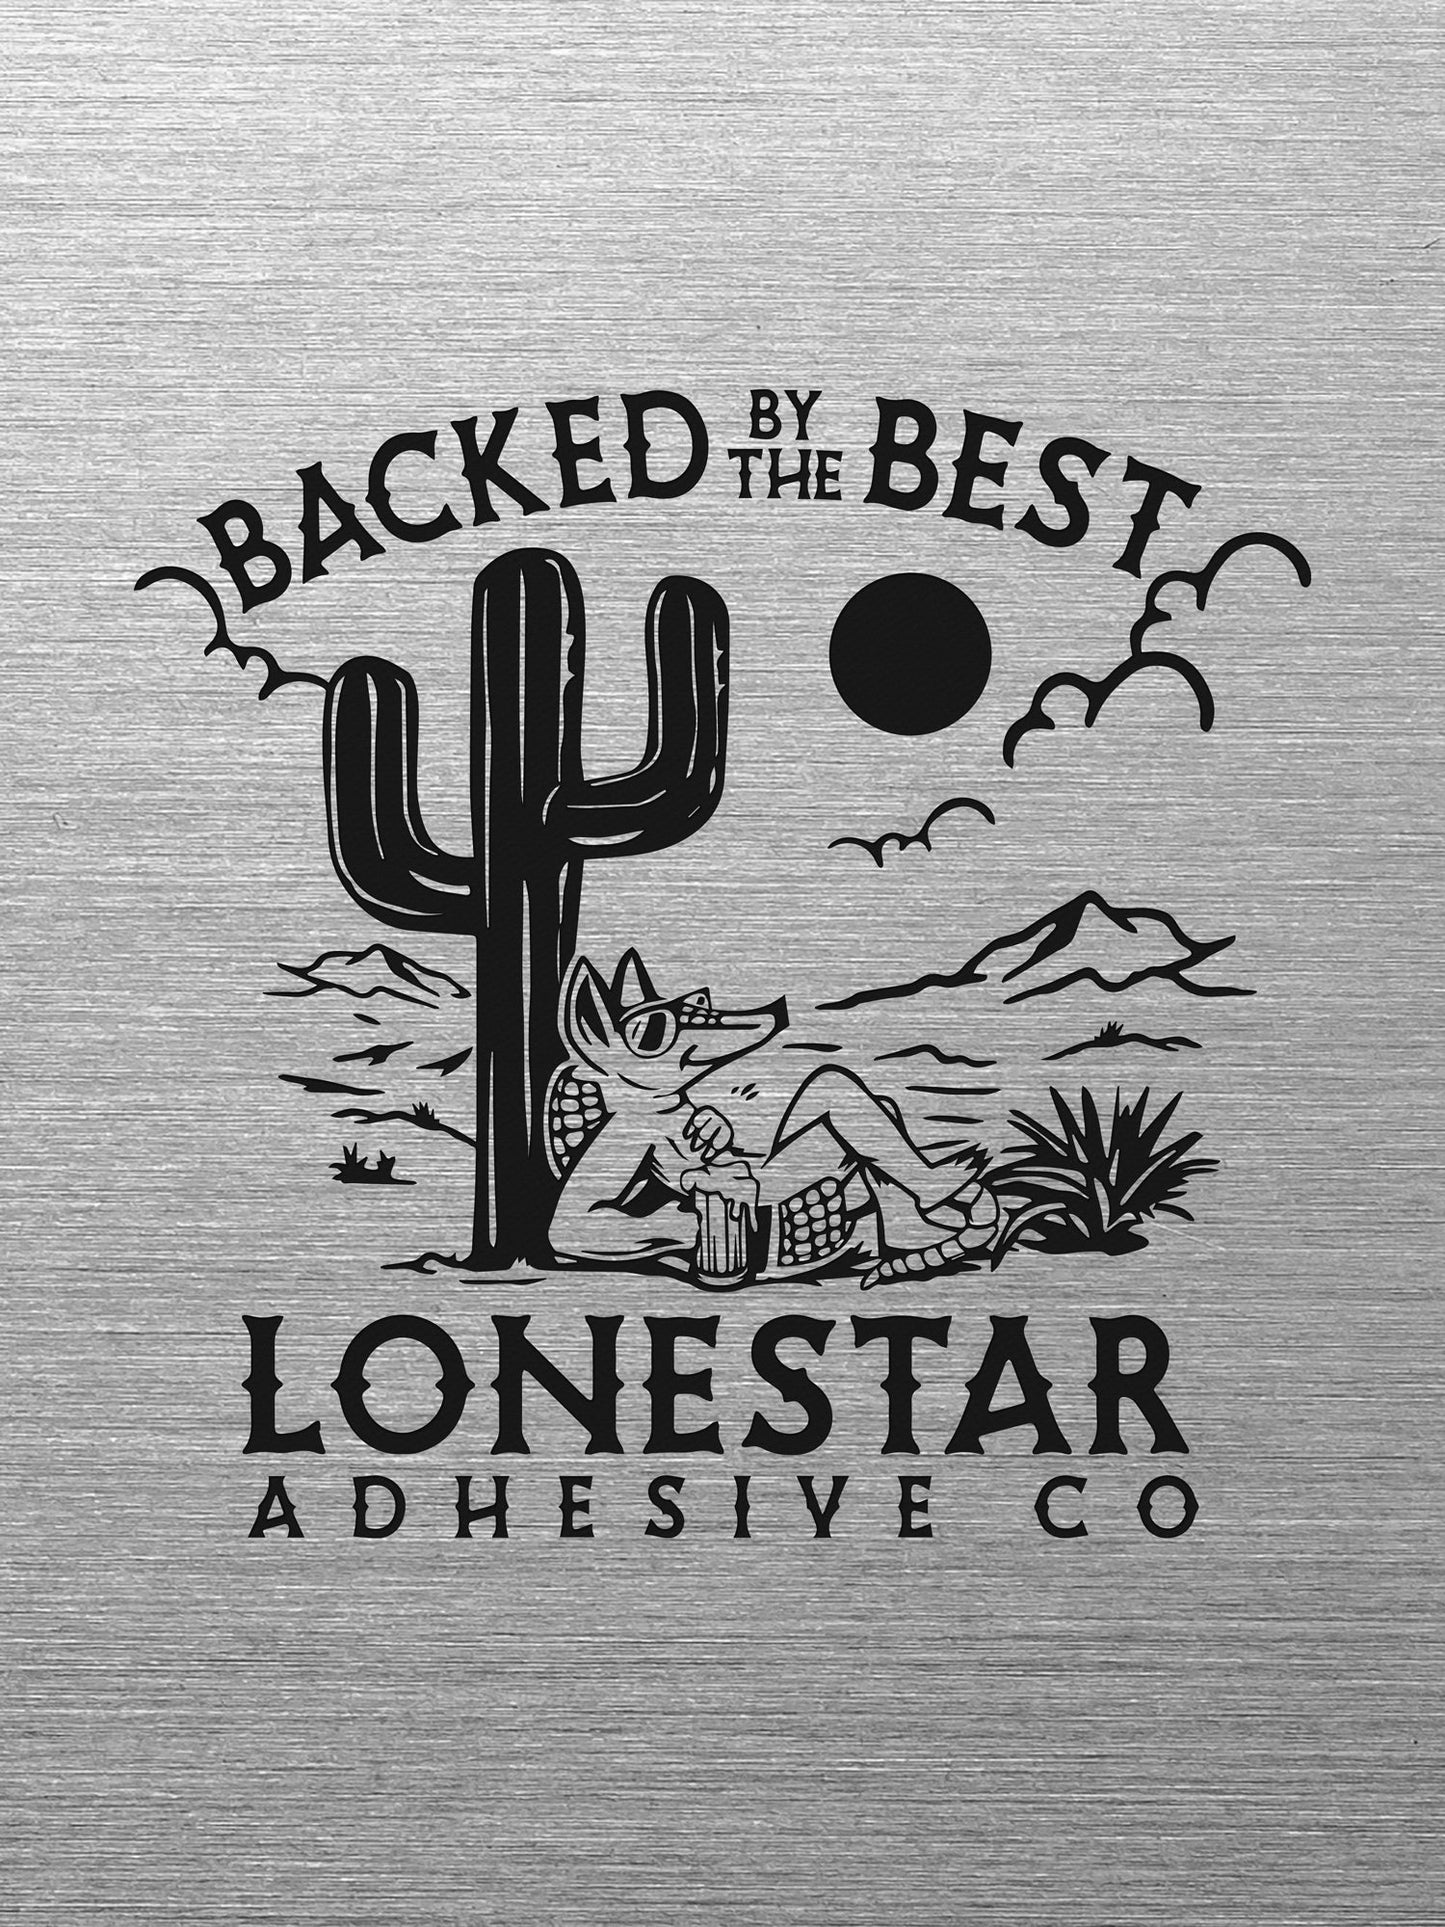 Brushed Stainless/Black laserable acrylic panels w/adhesive(12x24) - #LoneStar Adhesive#